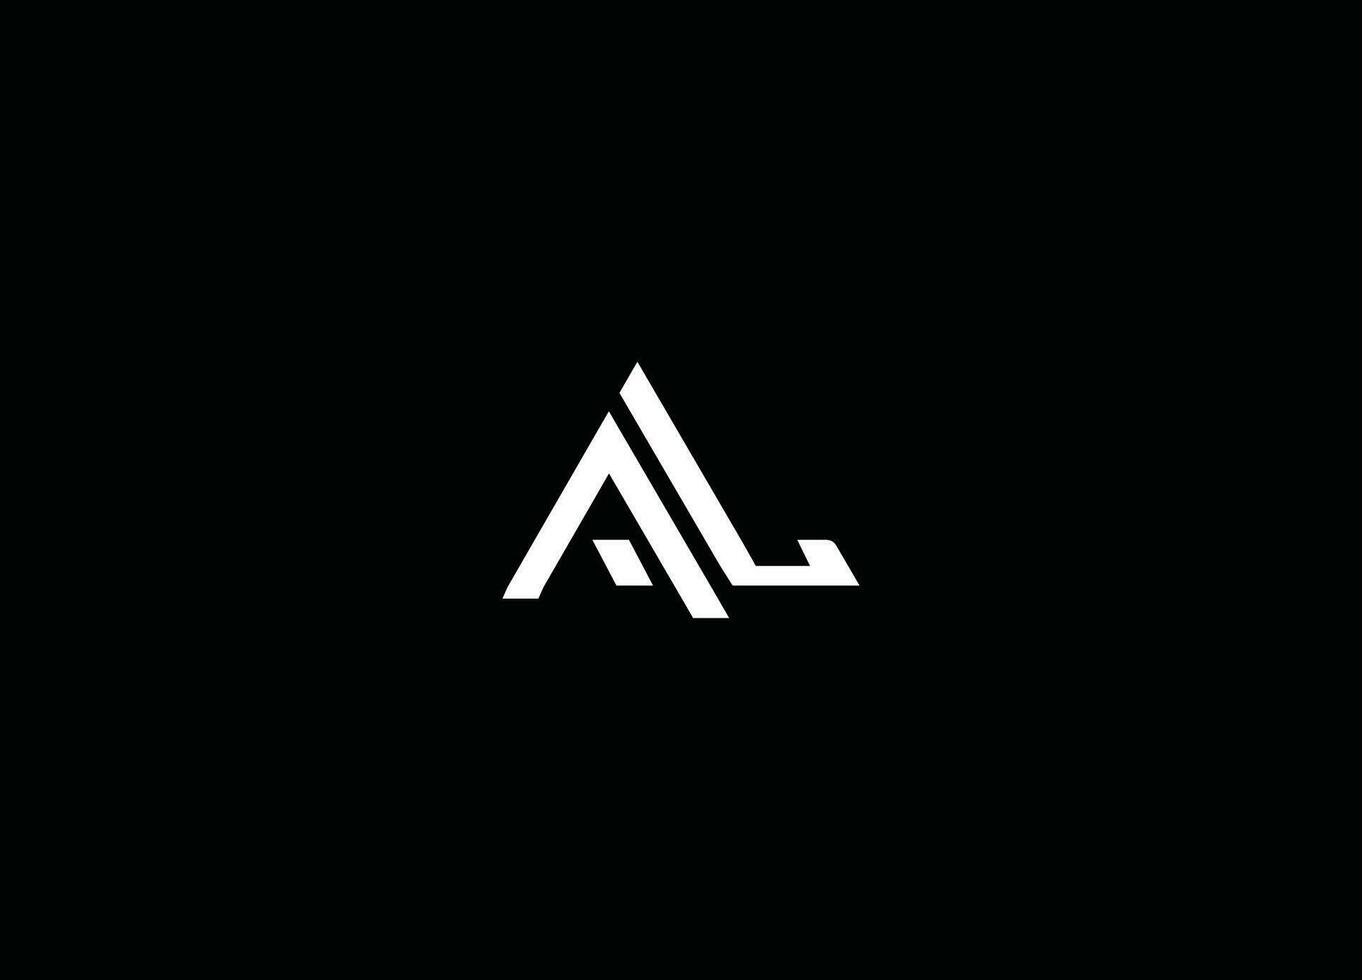 AL logo, la logo, al letter logo,  AL monogram logo, AL lainitials logo vector